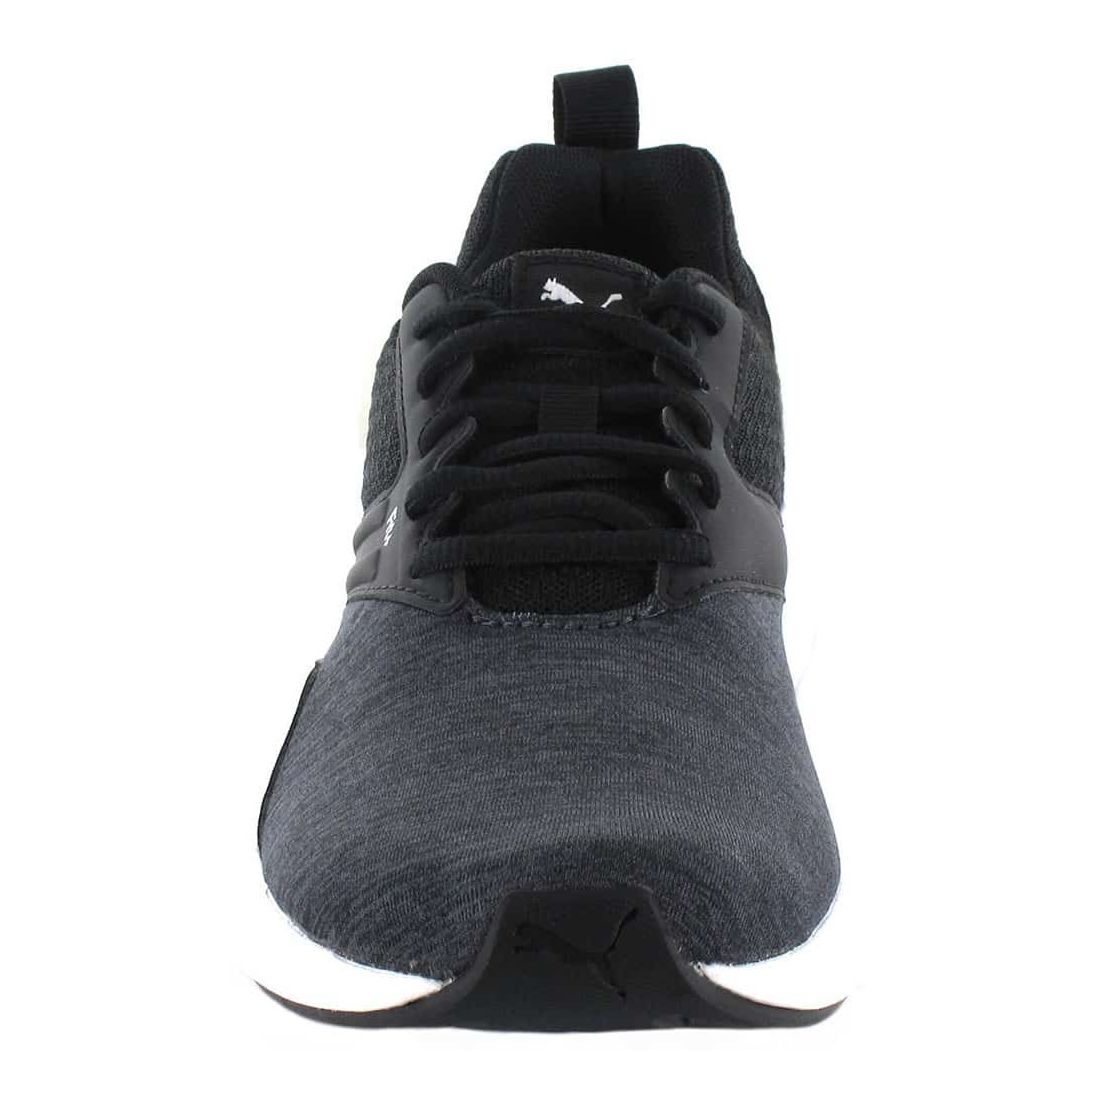 Puma NRGY Comète Noir Blanc - Chaussures de Running Man